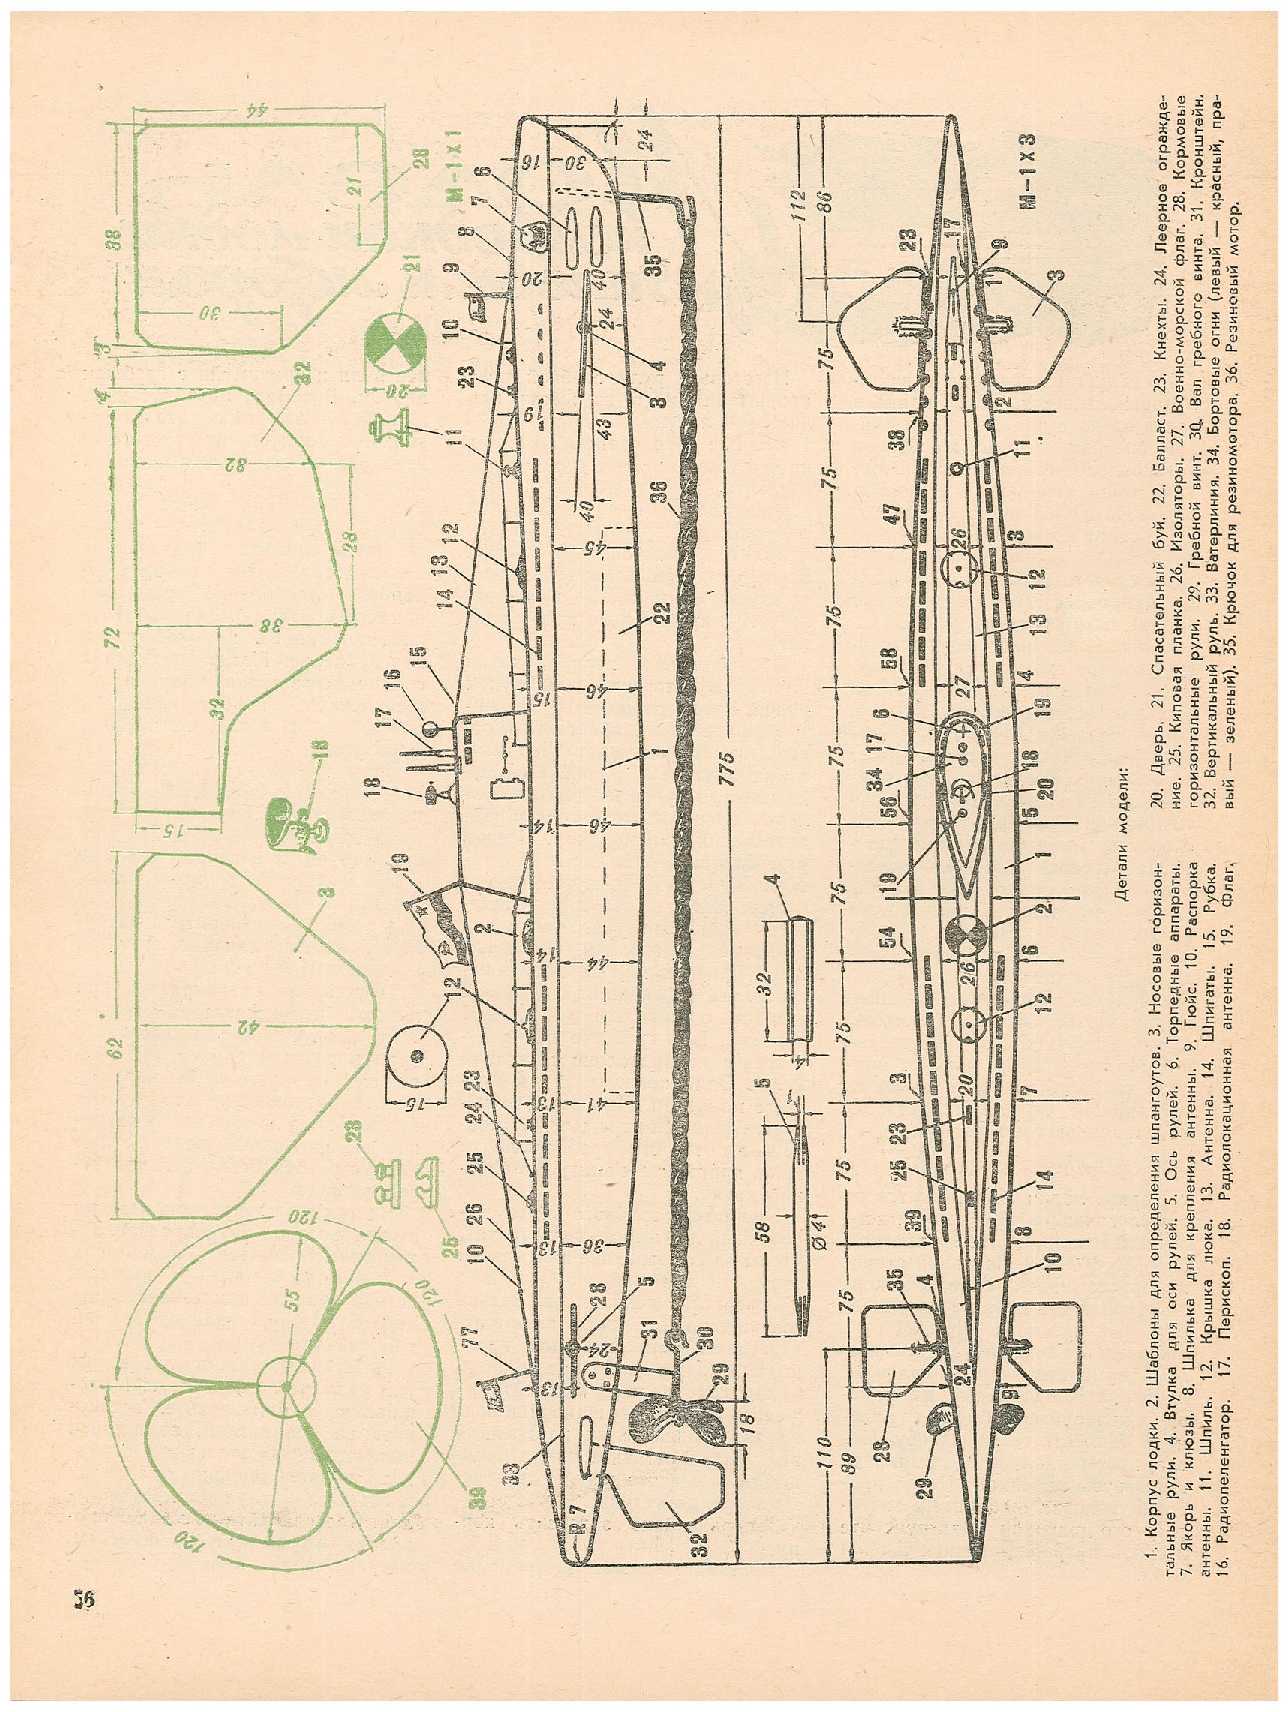 ЮМК 9, 1964, 56 c.